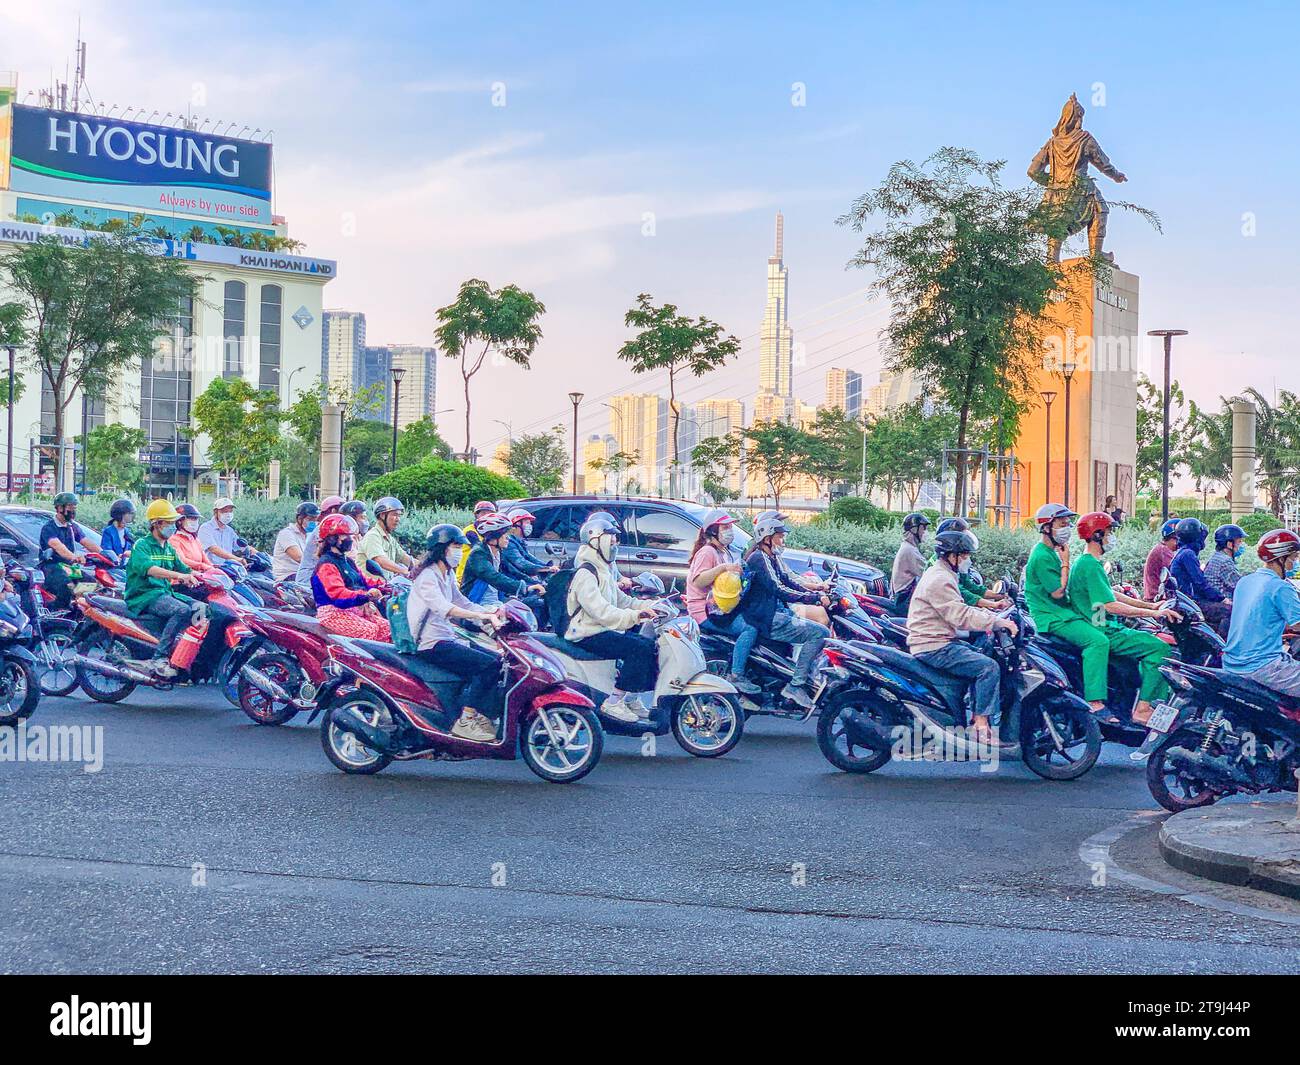 Vietnam, Ho Chi Minh Motorbike Traffic in Rush Hour. Tran Hung Dao Statue, 13th Century Military hero in background. Stock Photo